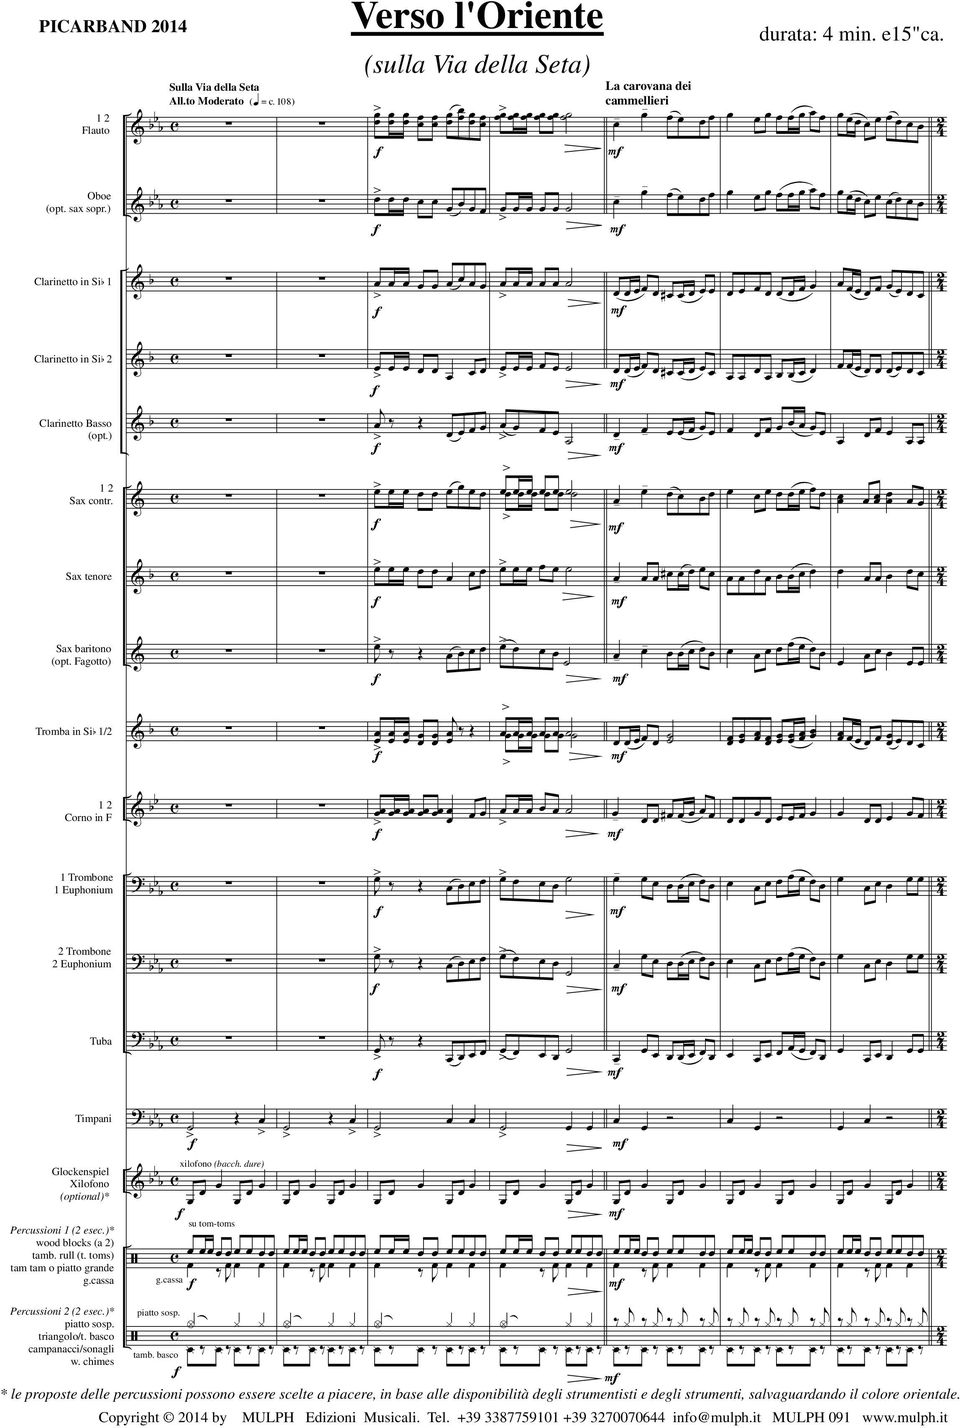 Fagotto) Tromba in Si 1/2 Corno in F 1 Trombone 1 Euphonium 2 Trombone 2 Euphonium Tuba Timpani Glockenspiel Xilofono (optional)* Percussioni 1 (2 esec.)* wood blocks (a 2) tamb. rull (t.